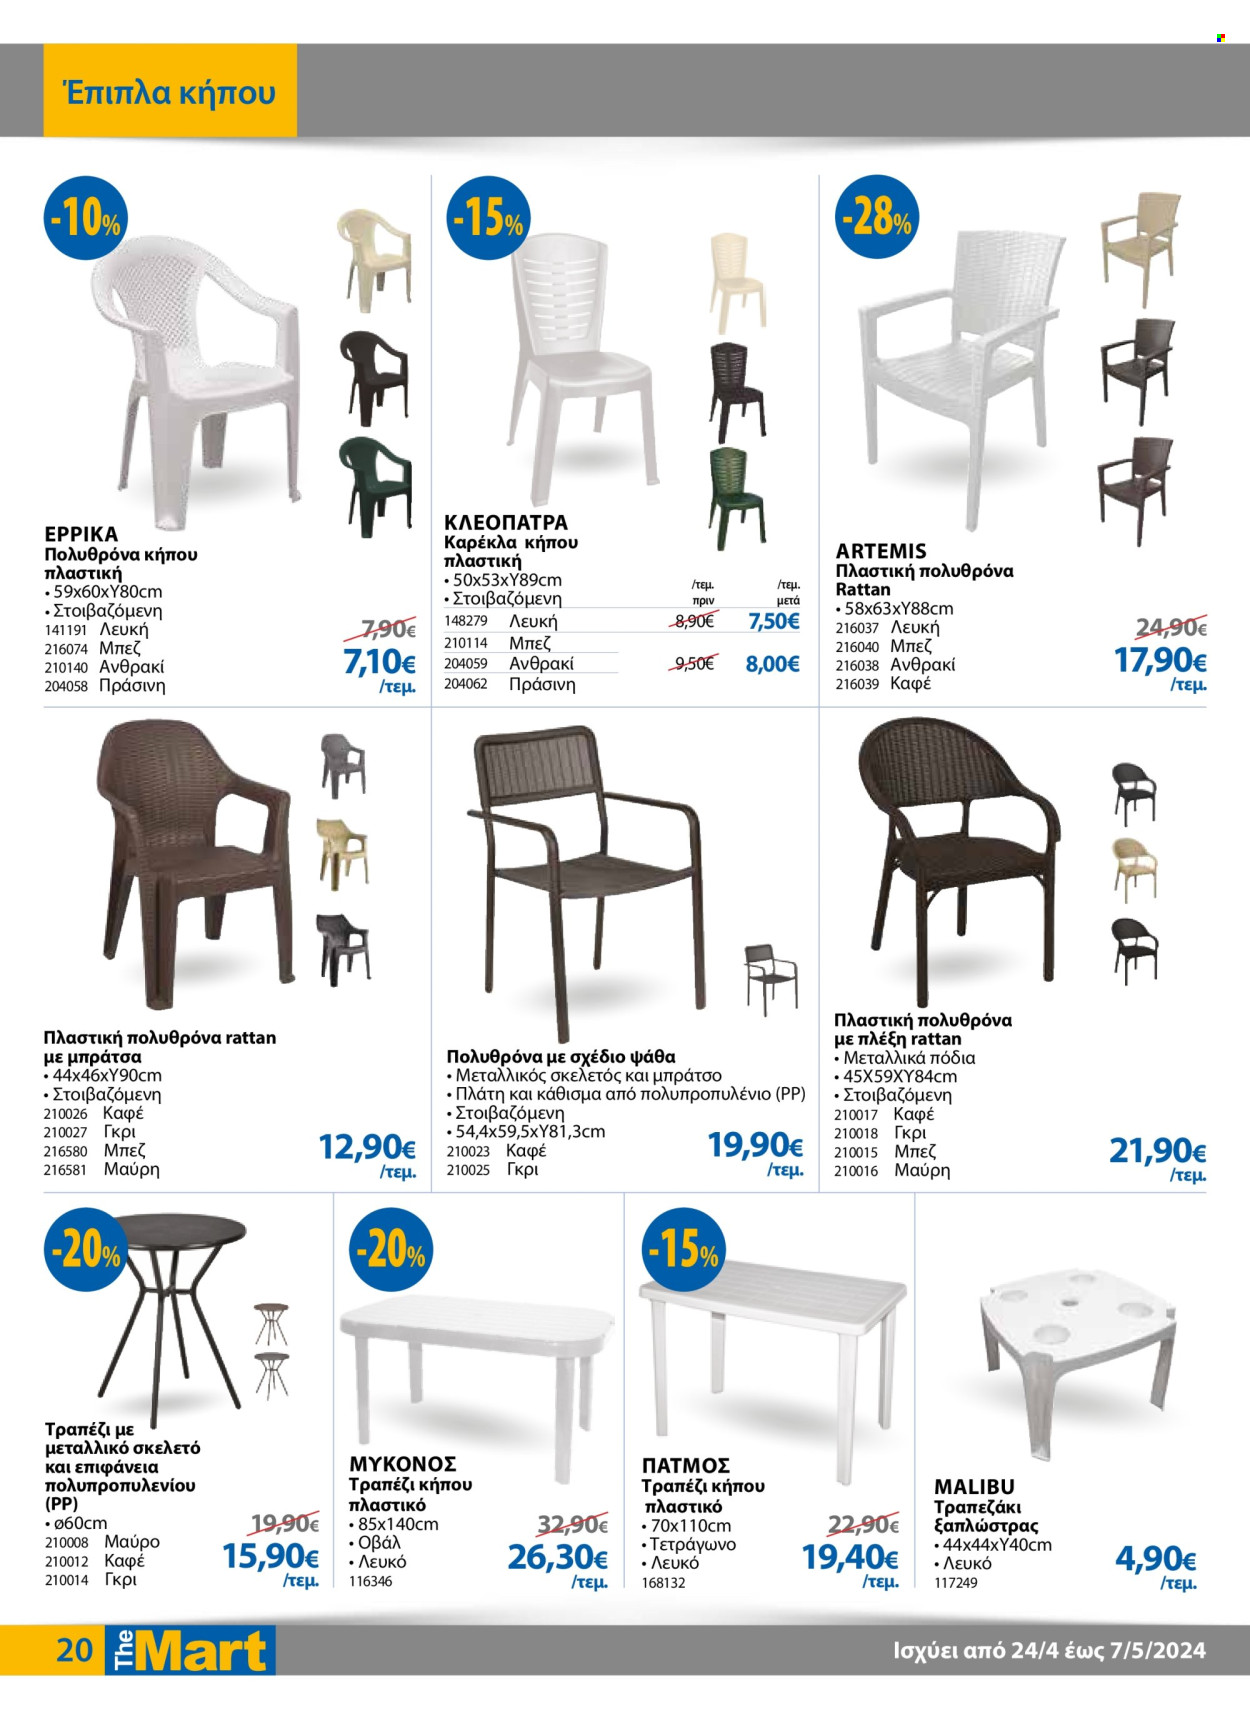 thumbnail - Φυλλάδια The Mart - 24.04.2024 - 07.05.2024 - Εκπτωτικά προϊόντα - καρέκλα, ποδιά, έπιπλα κήπου, καρέκλα κηπου. Σελίδα 20.